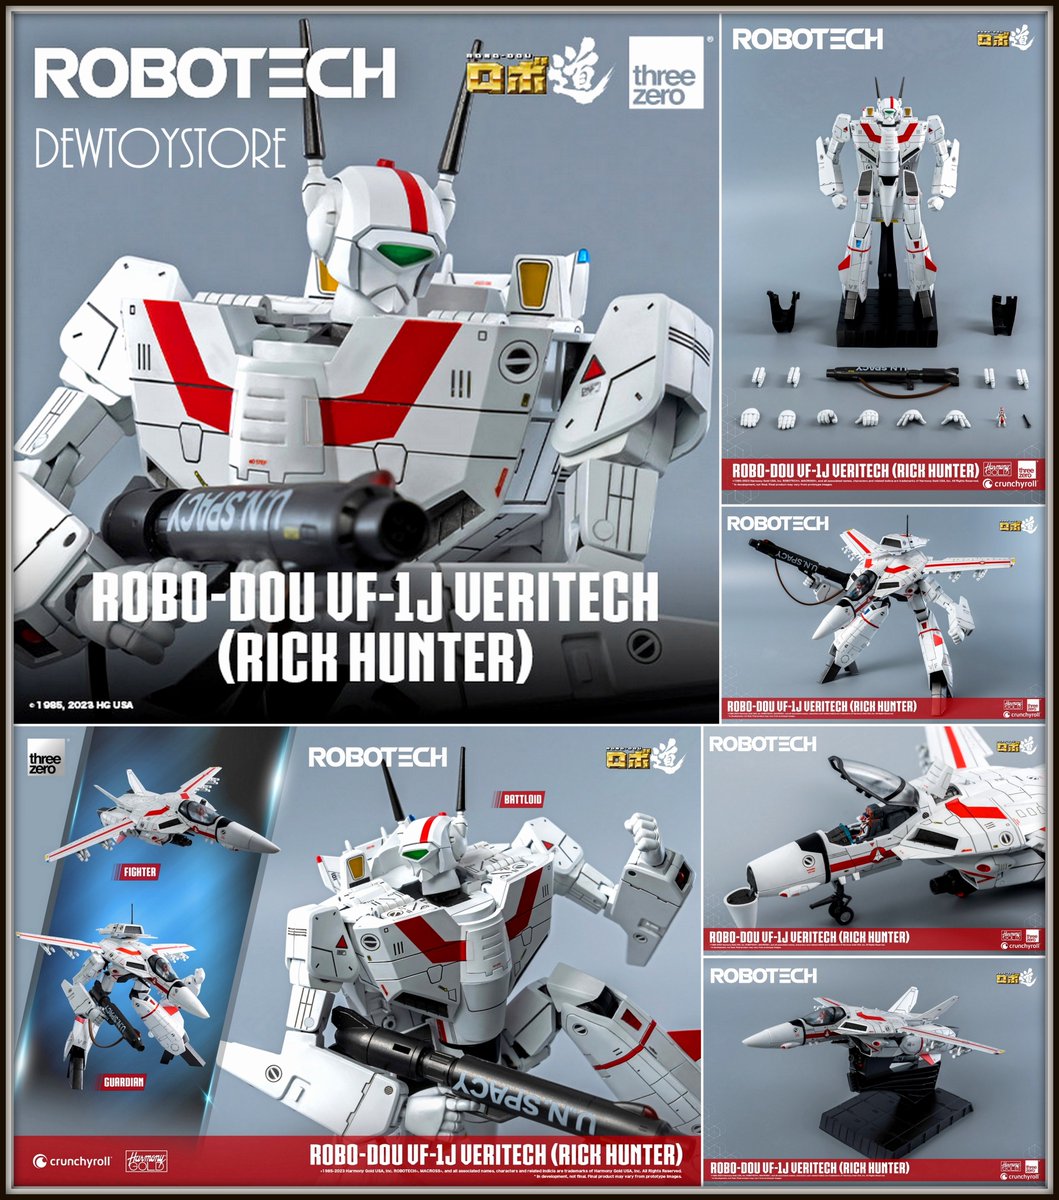 ⭐️ [𝗣𝗿𝗲-𝗼𝗿𝗱𝗲𝗿] Threezero Robo-Dou Metal Alloy Chogokin Mecha Robot Action Figure - 3Z0304 Robotech / Macross - VF-1J Veritech (Rick Hunter)⭐️
ohmyprimus.com/tzr3z0304.html

#ohmyprimus #dewtoystore #robodou #mecharobot #threezero #robotech #macross #vertiech #rickhunter #vf1j